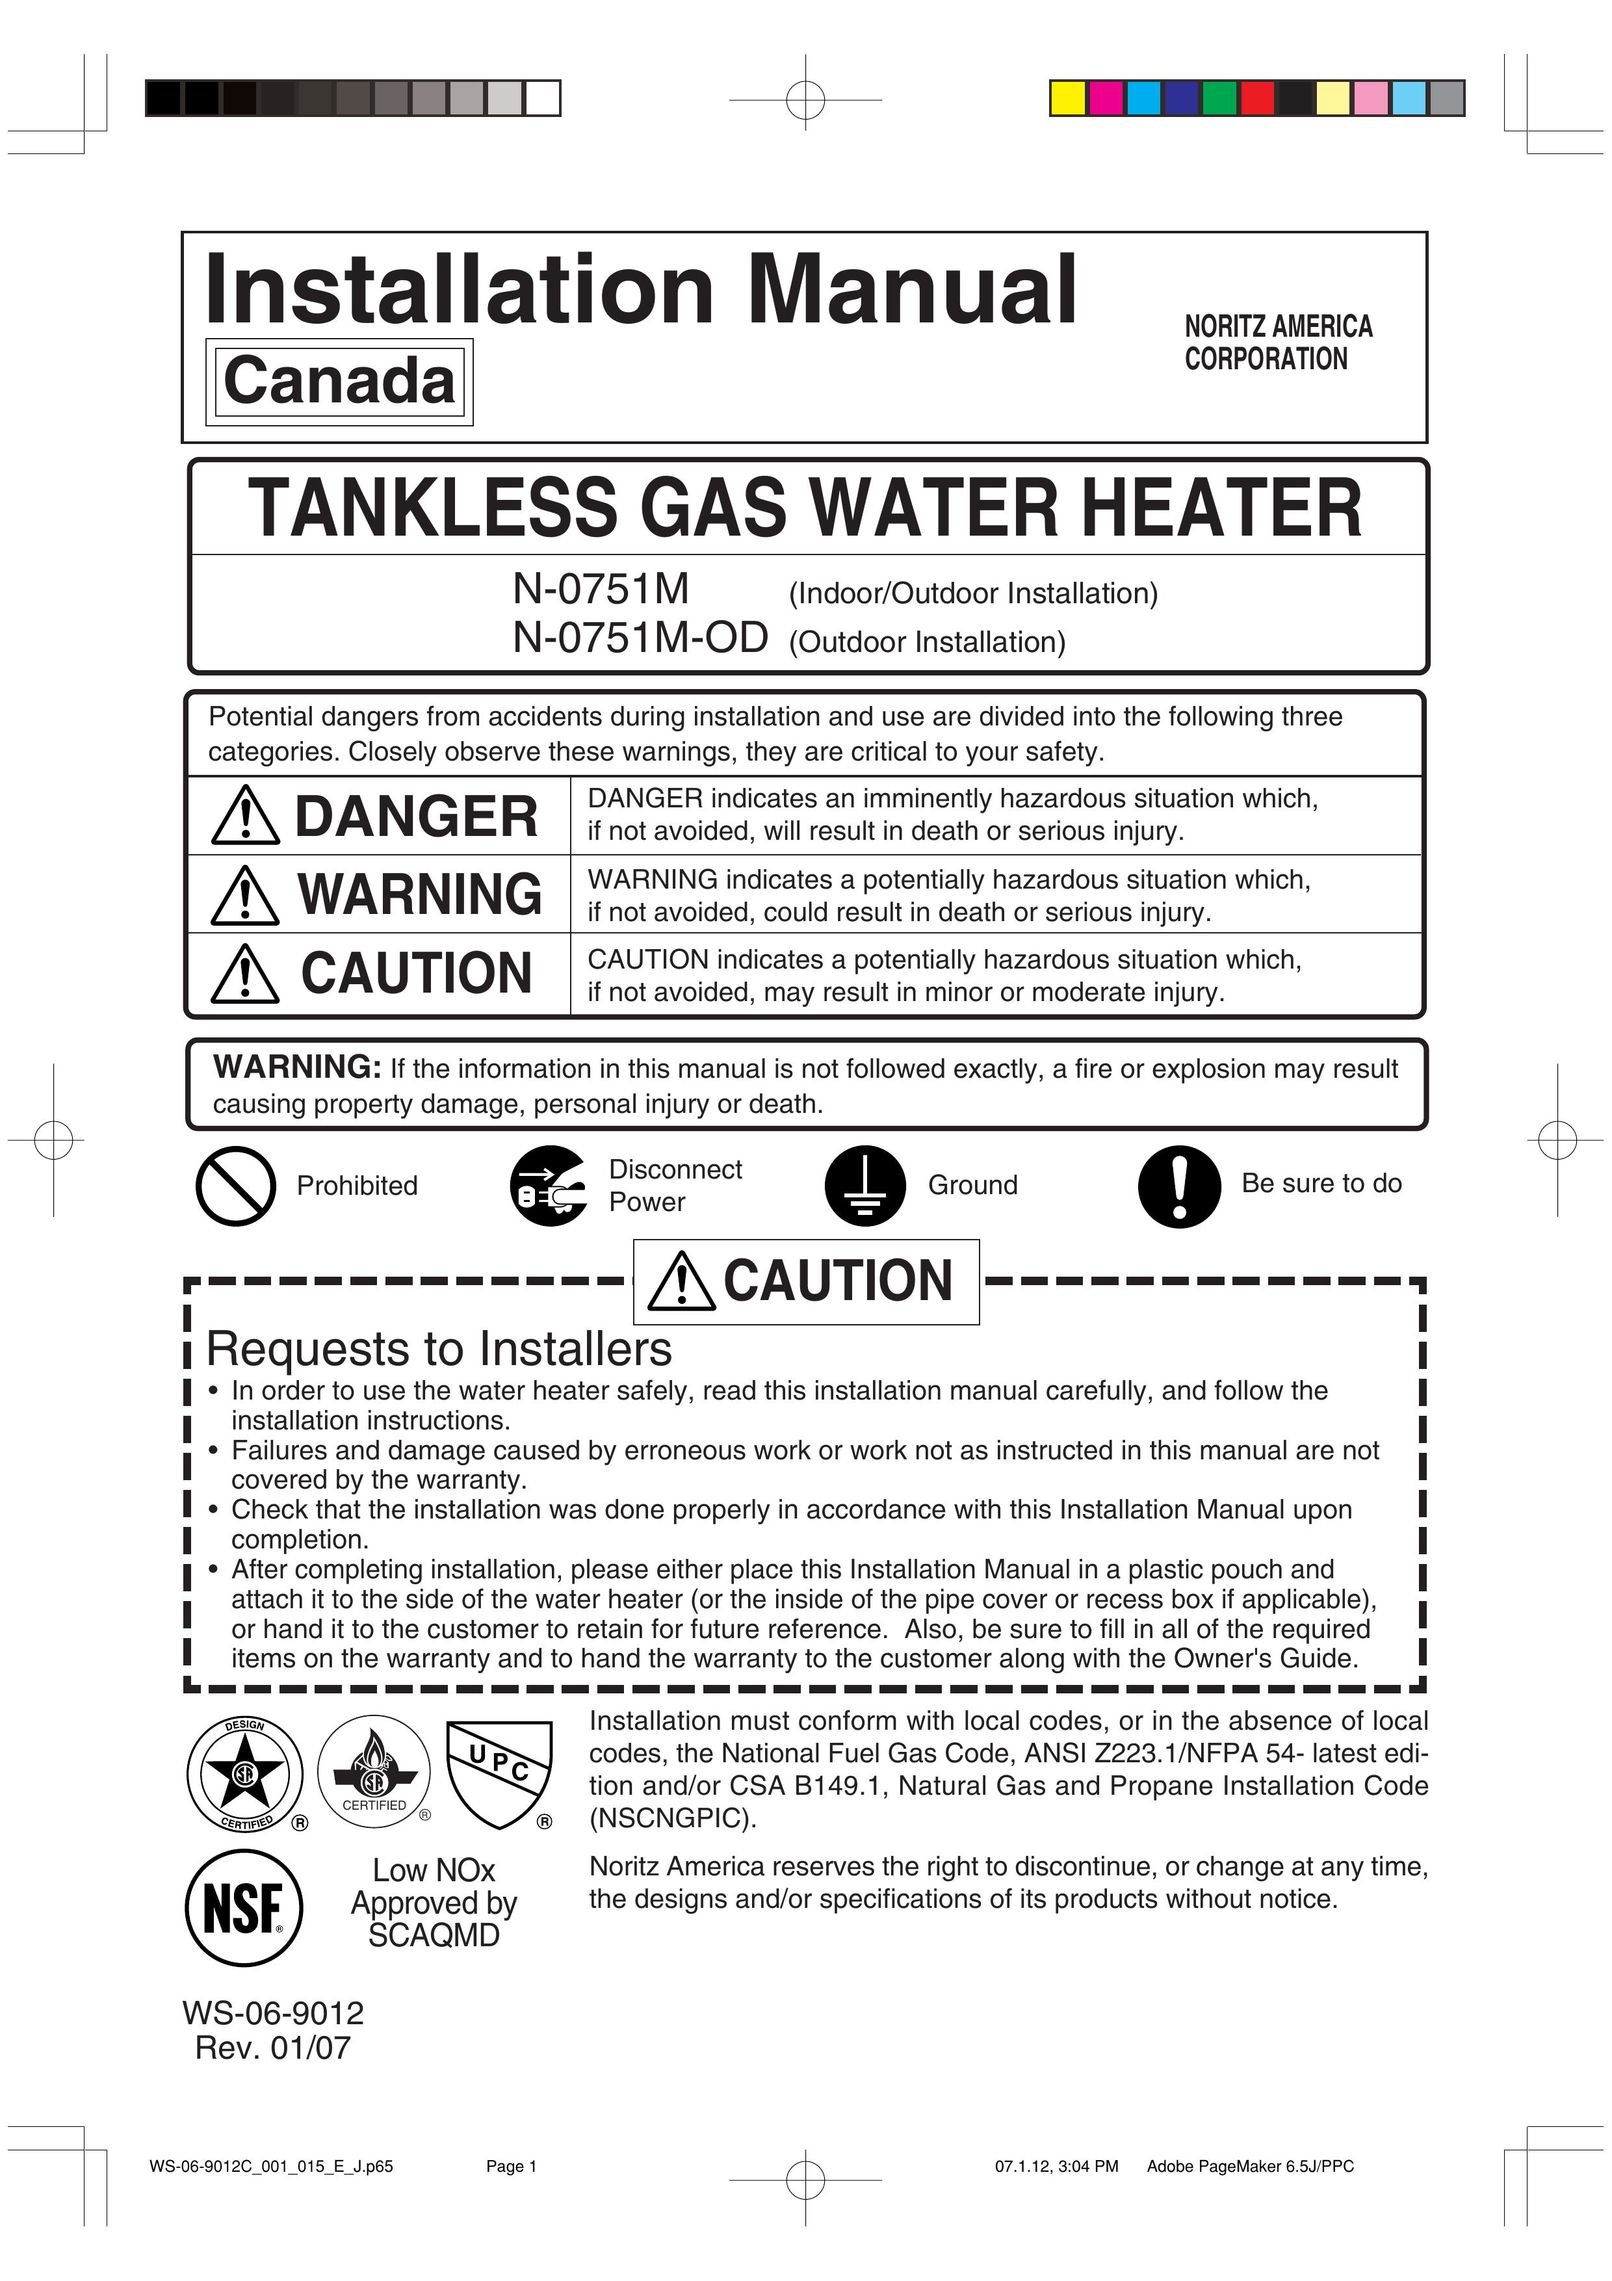 Pentax N-0751M-OD Water Heater User Manual